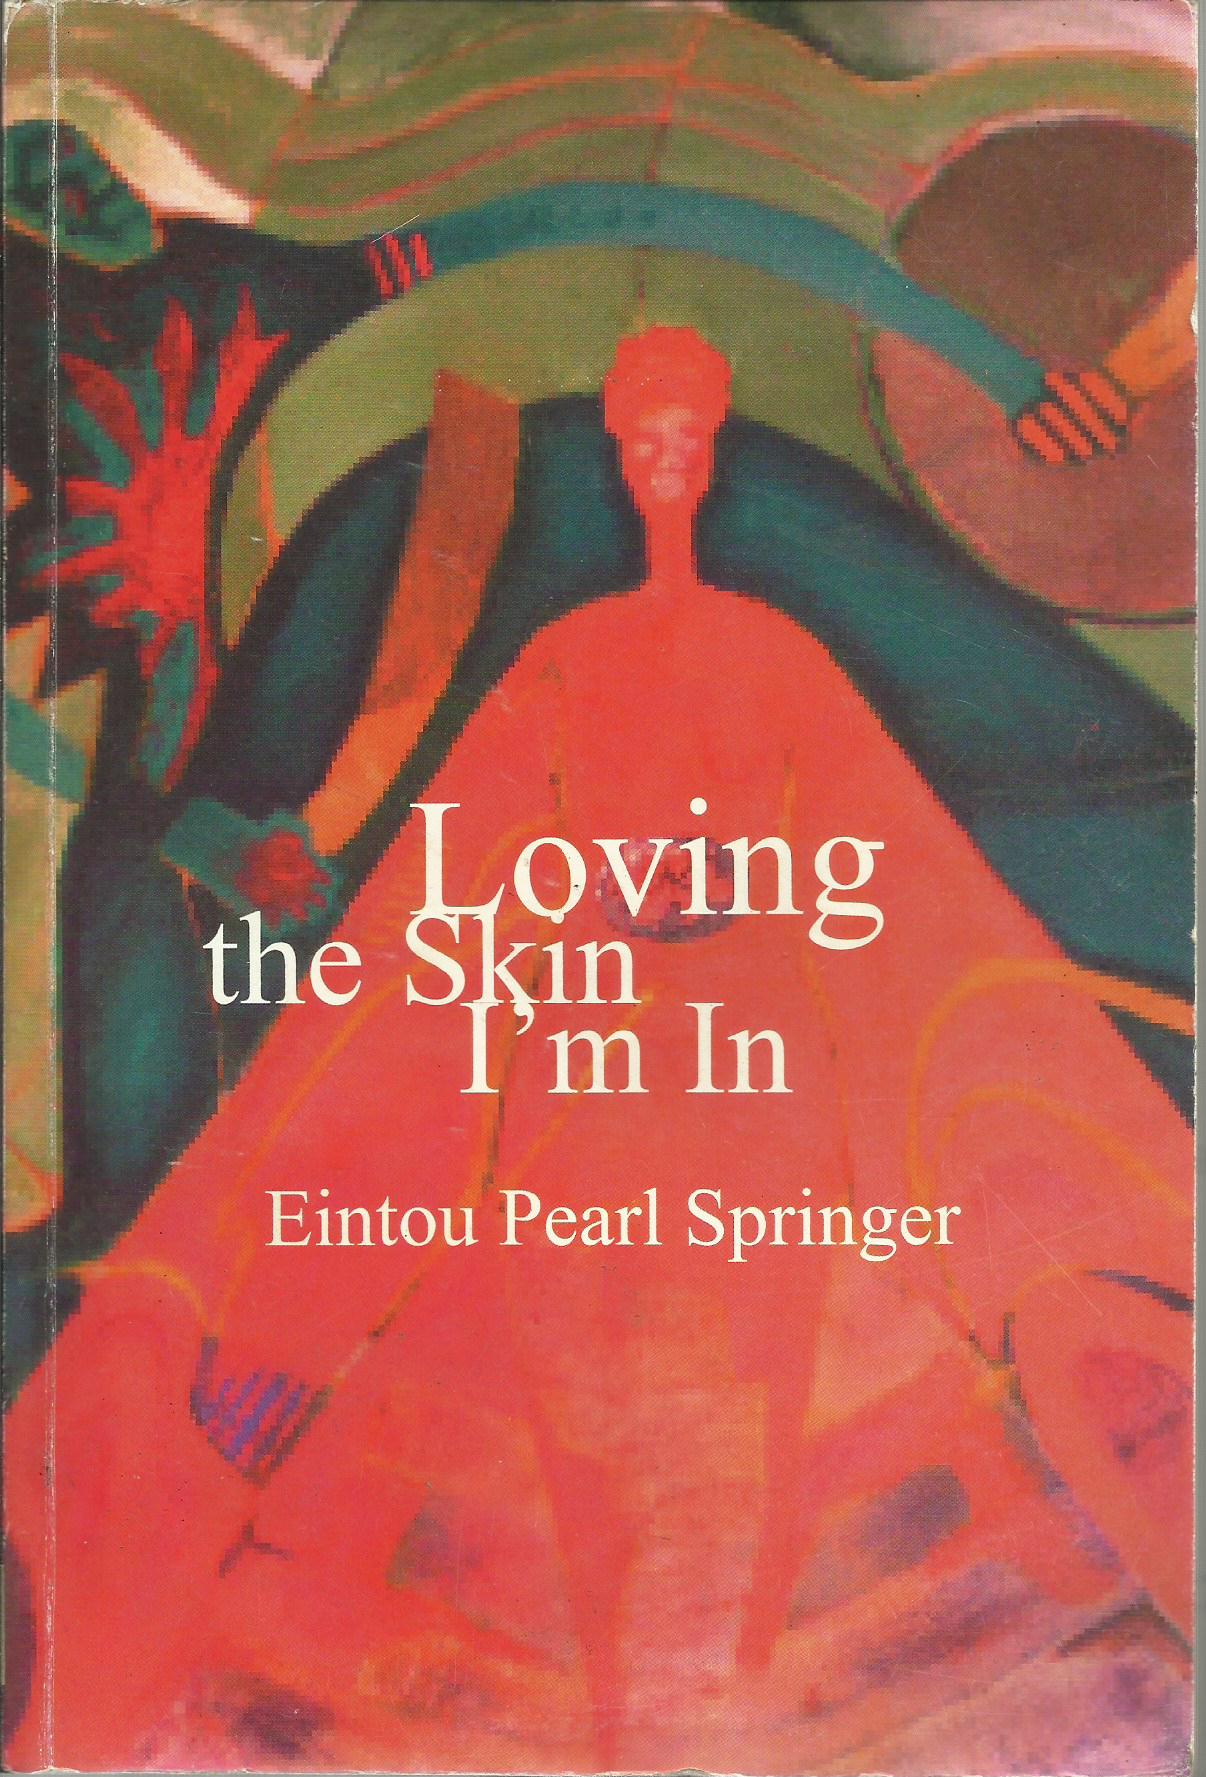 pearl_eintou_springer_book_cover_1.jpg